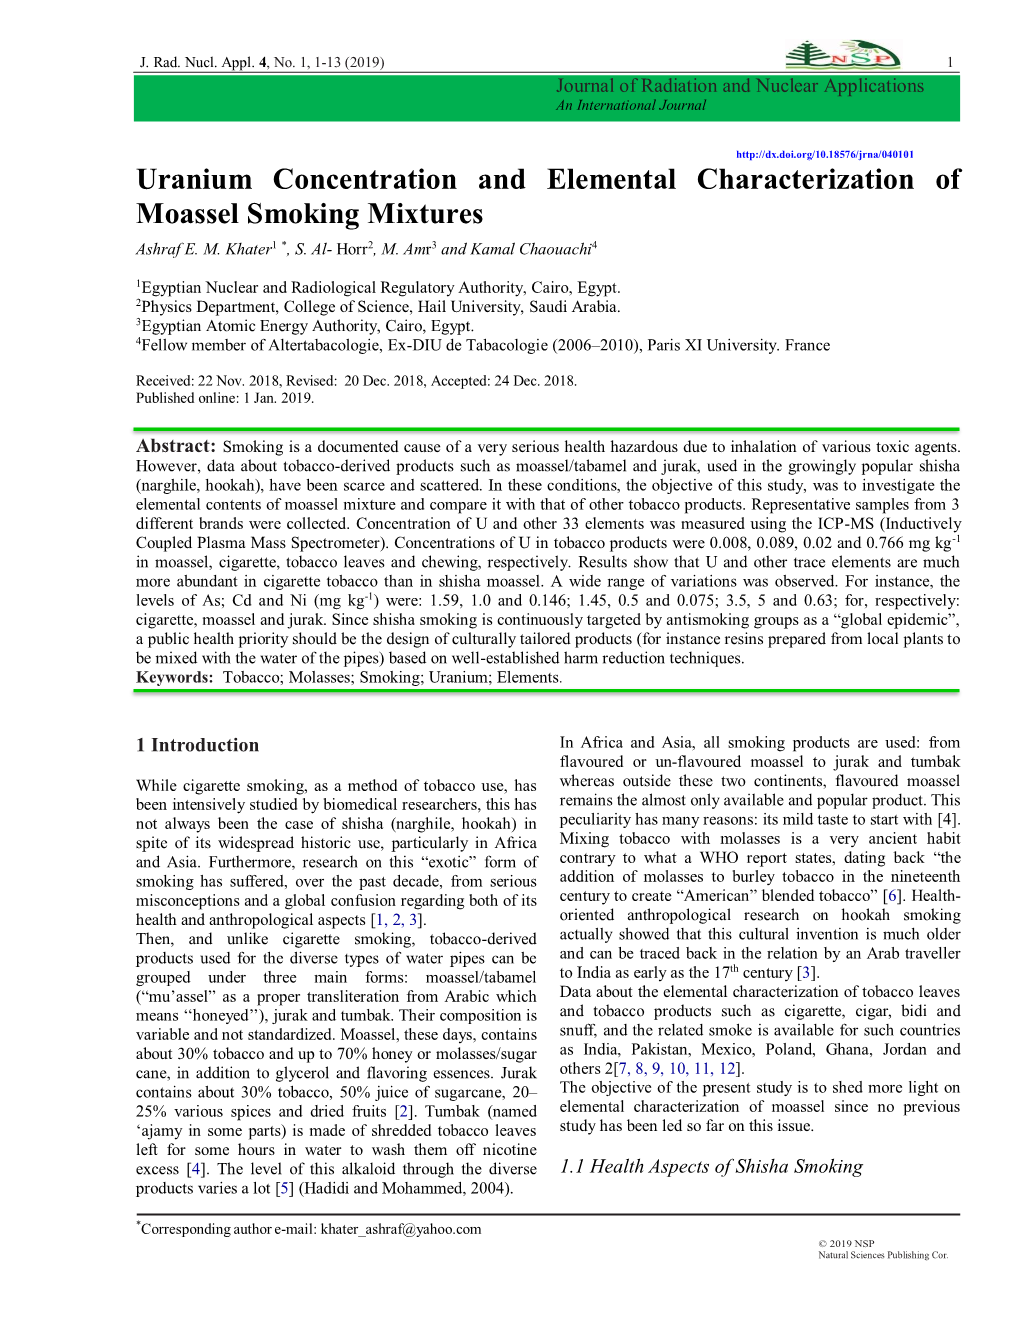 Uranium Concentration and Elemental Characterization of Moassel Smoking Mixtures Ashraf E